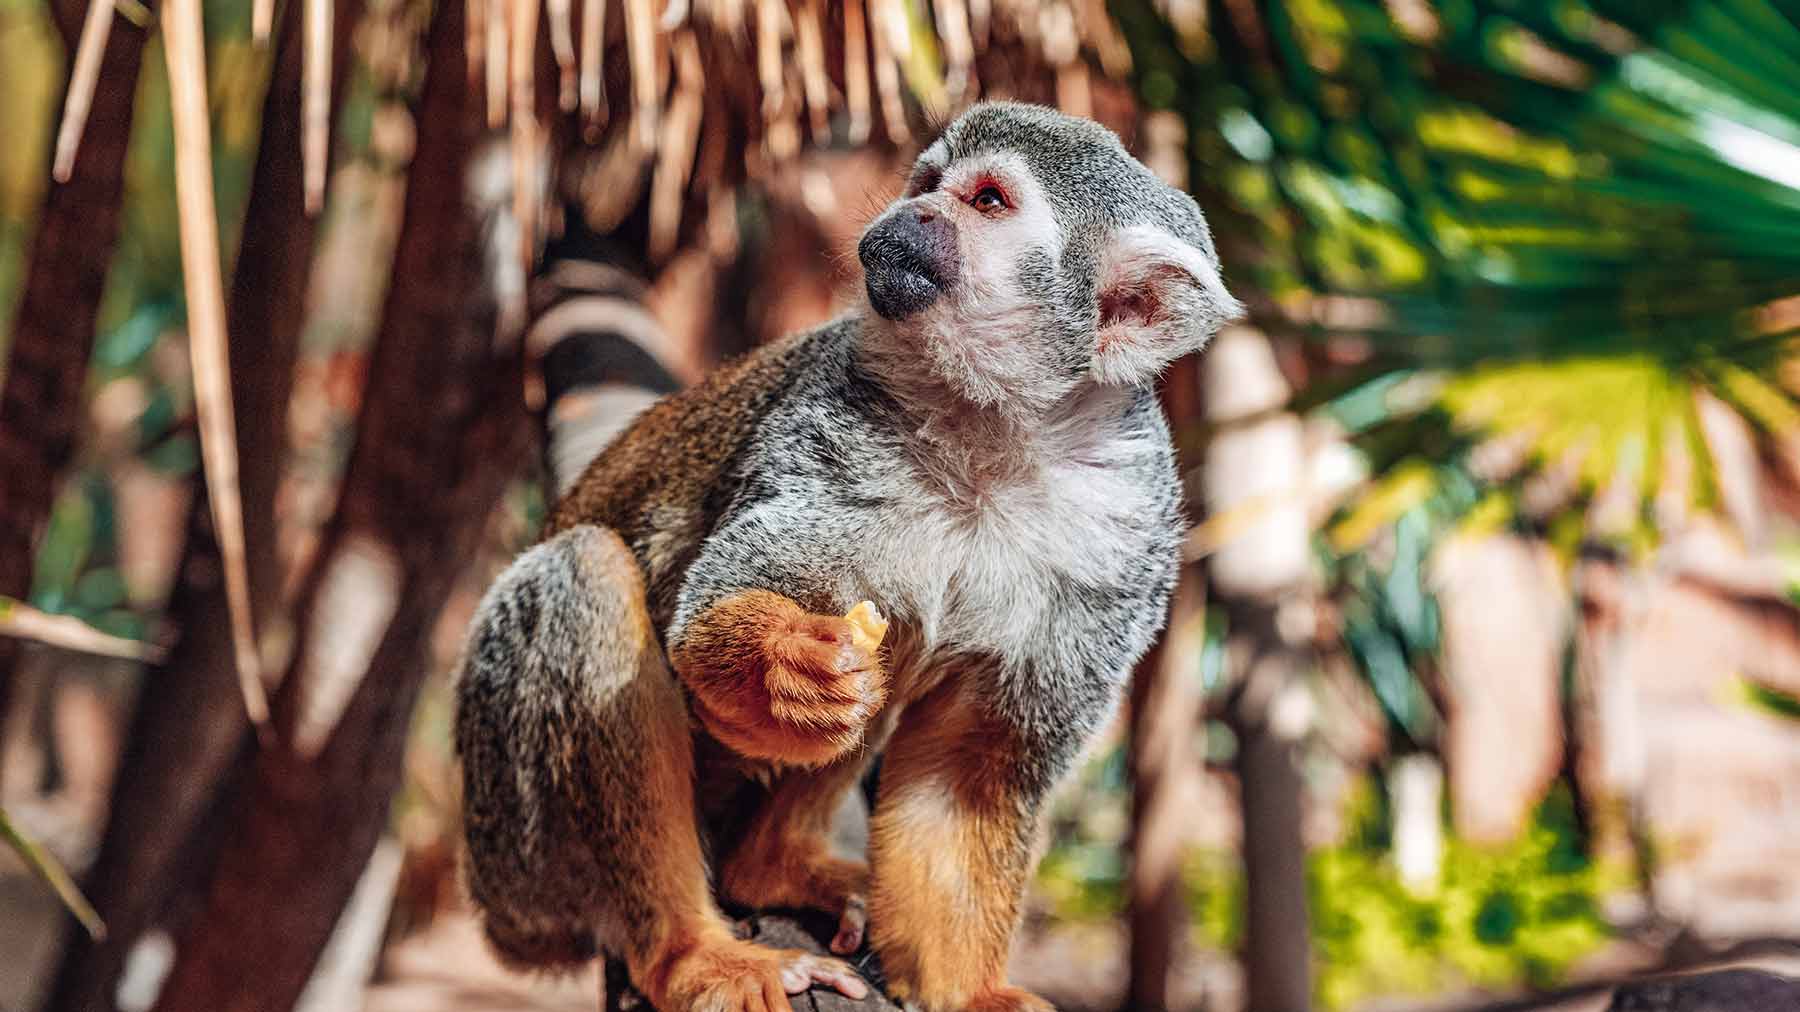 Visit Monkey Park - Tenerife's Best Interactive Zoo